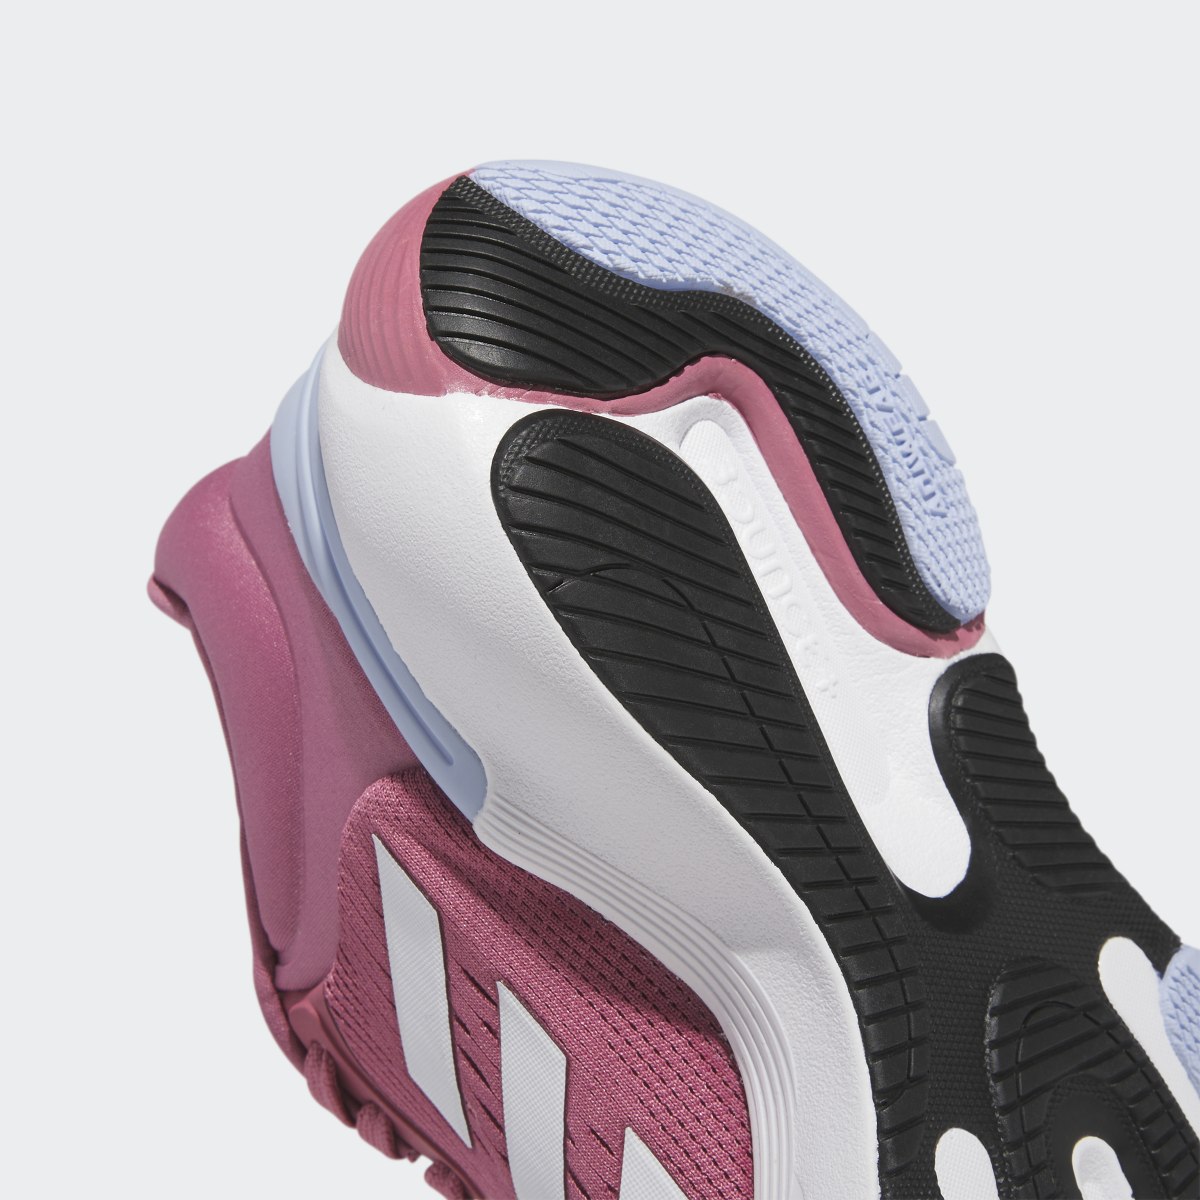 Adidas Response Super 3.0 Running Shoes. 10